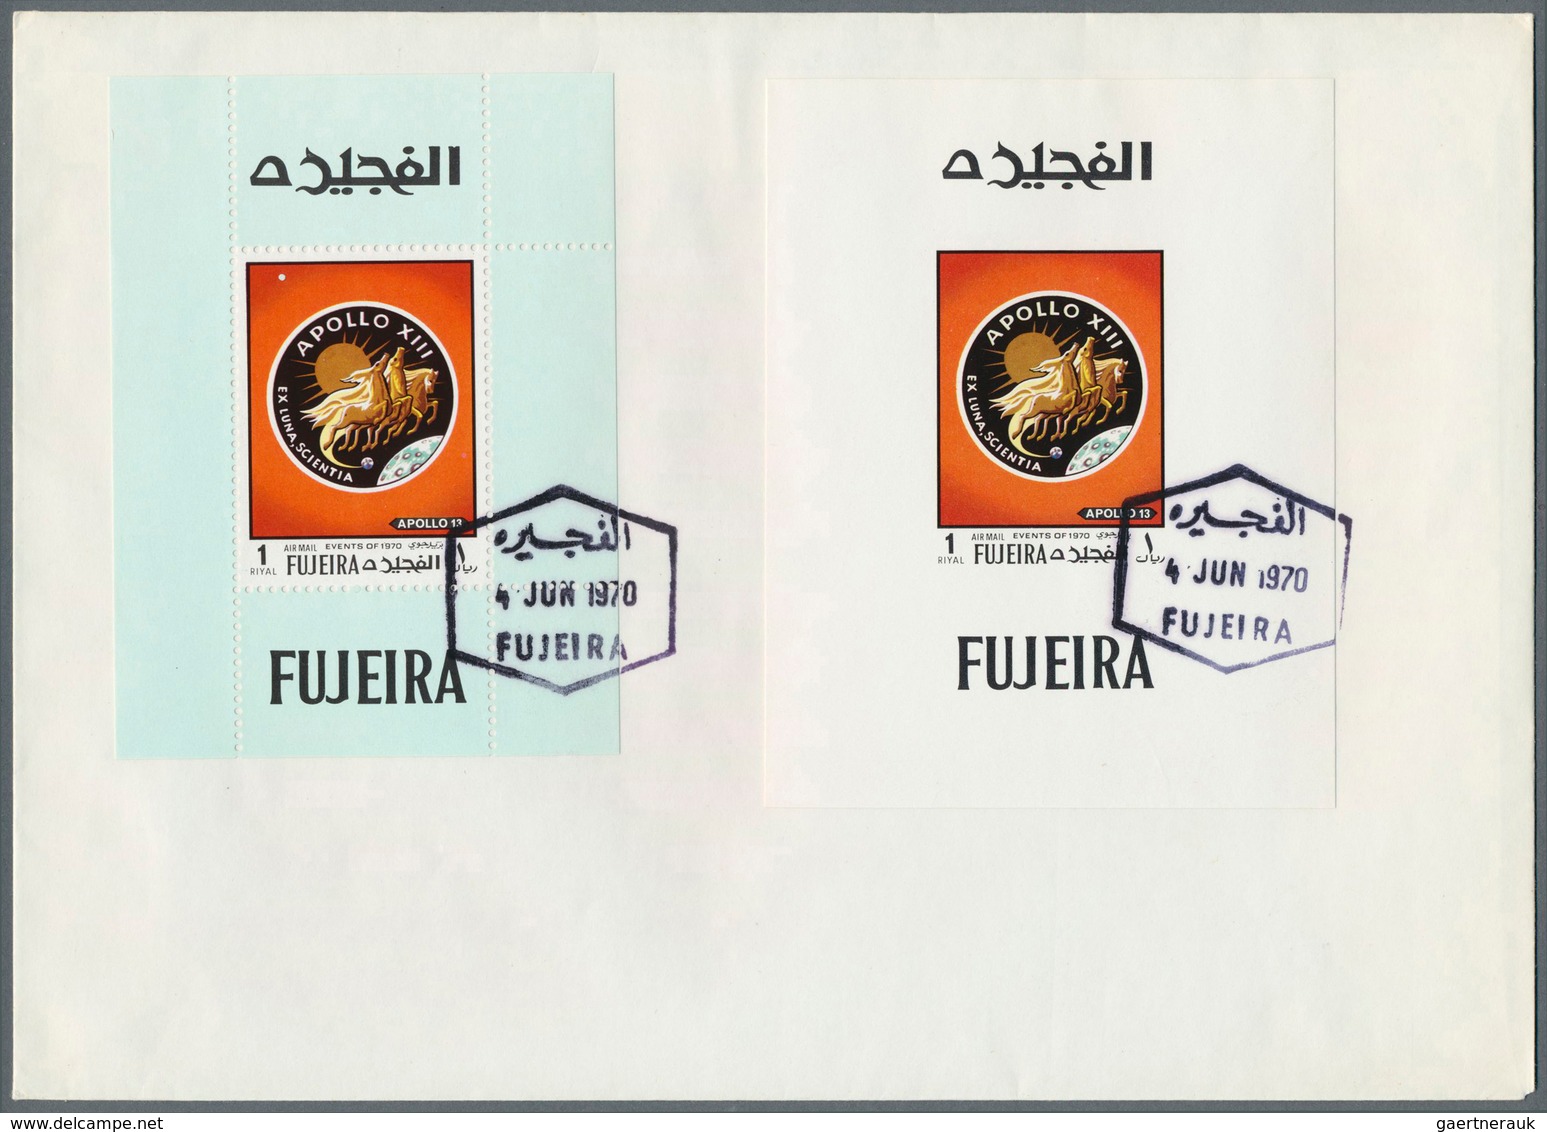 Thematik: Raumfahrt / astronautics: 1970/1972, "Space" issues of Fujeira, Ajman and Sharjah (incl. d